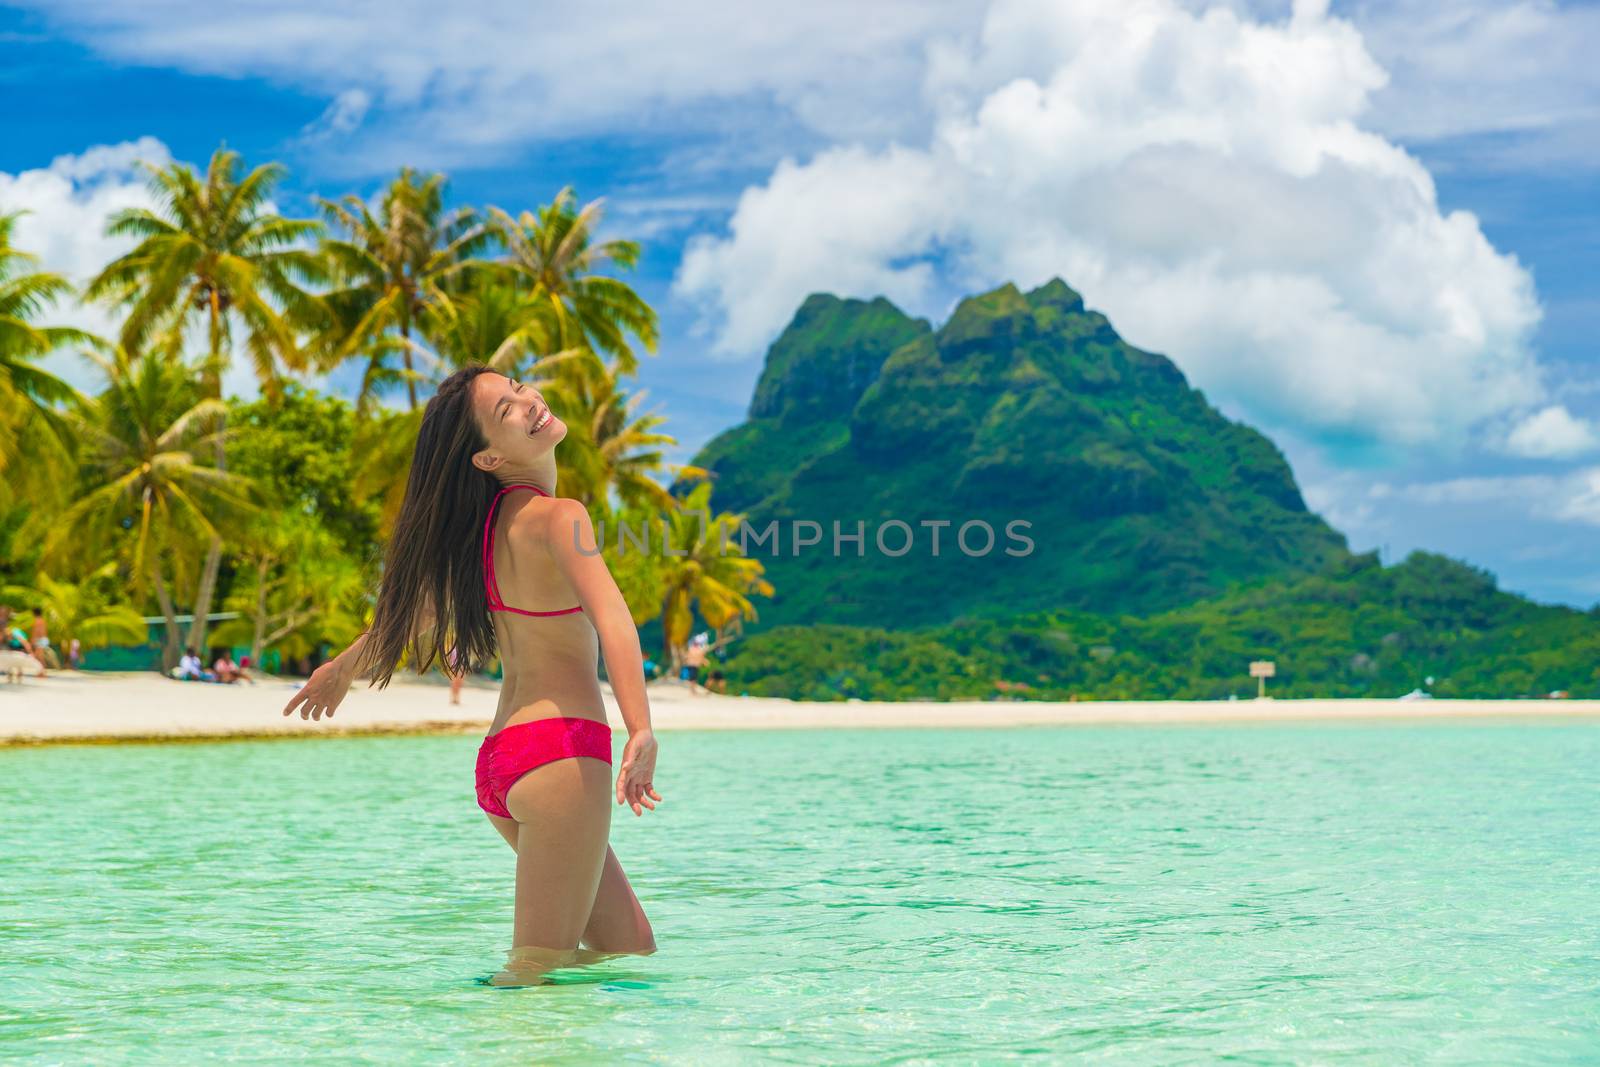 Bora bora luxury vacation travel paradise bikini woman swimming at island in Tahiti, French Polynesia. Popular honeymoon destination holiday in South Pacific, Oceania.